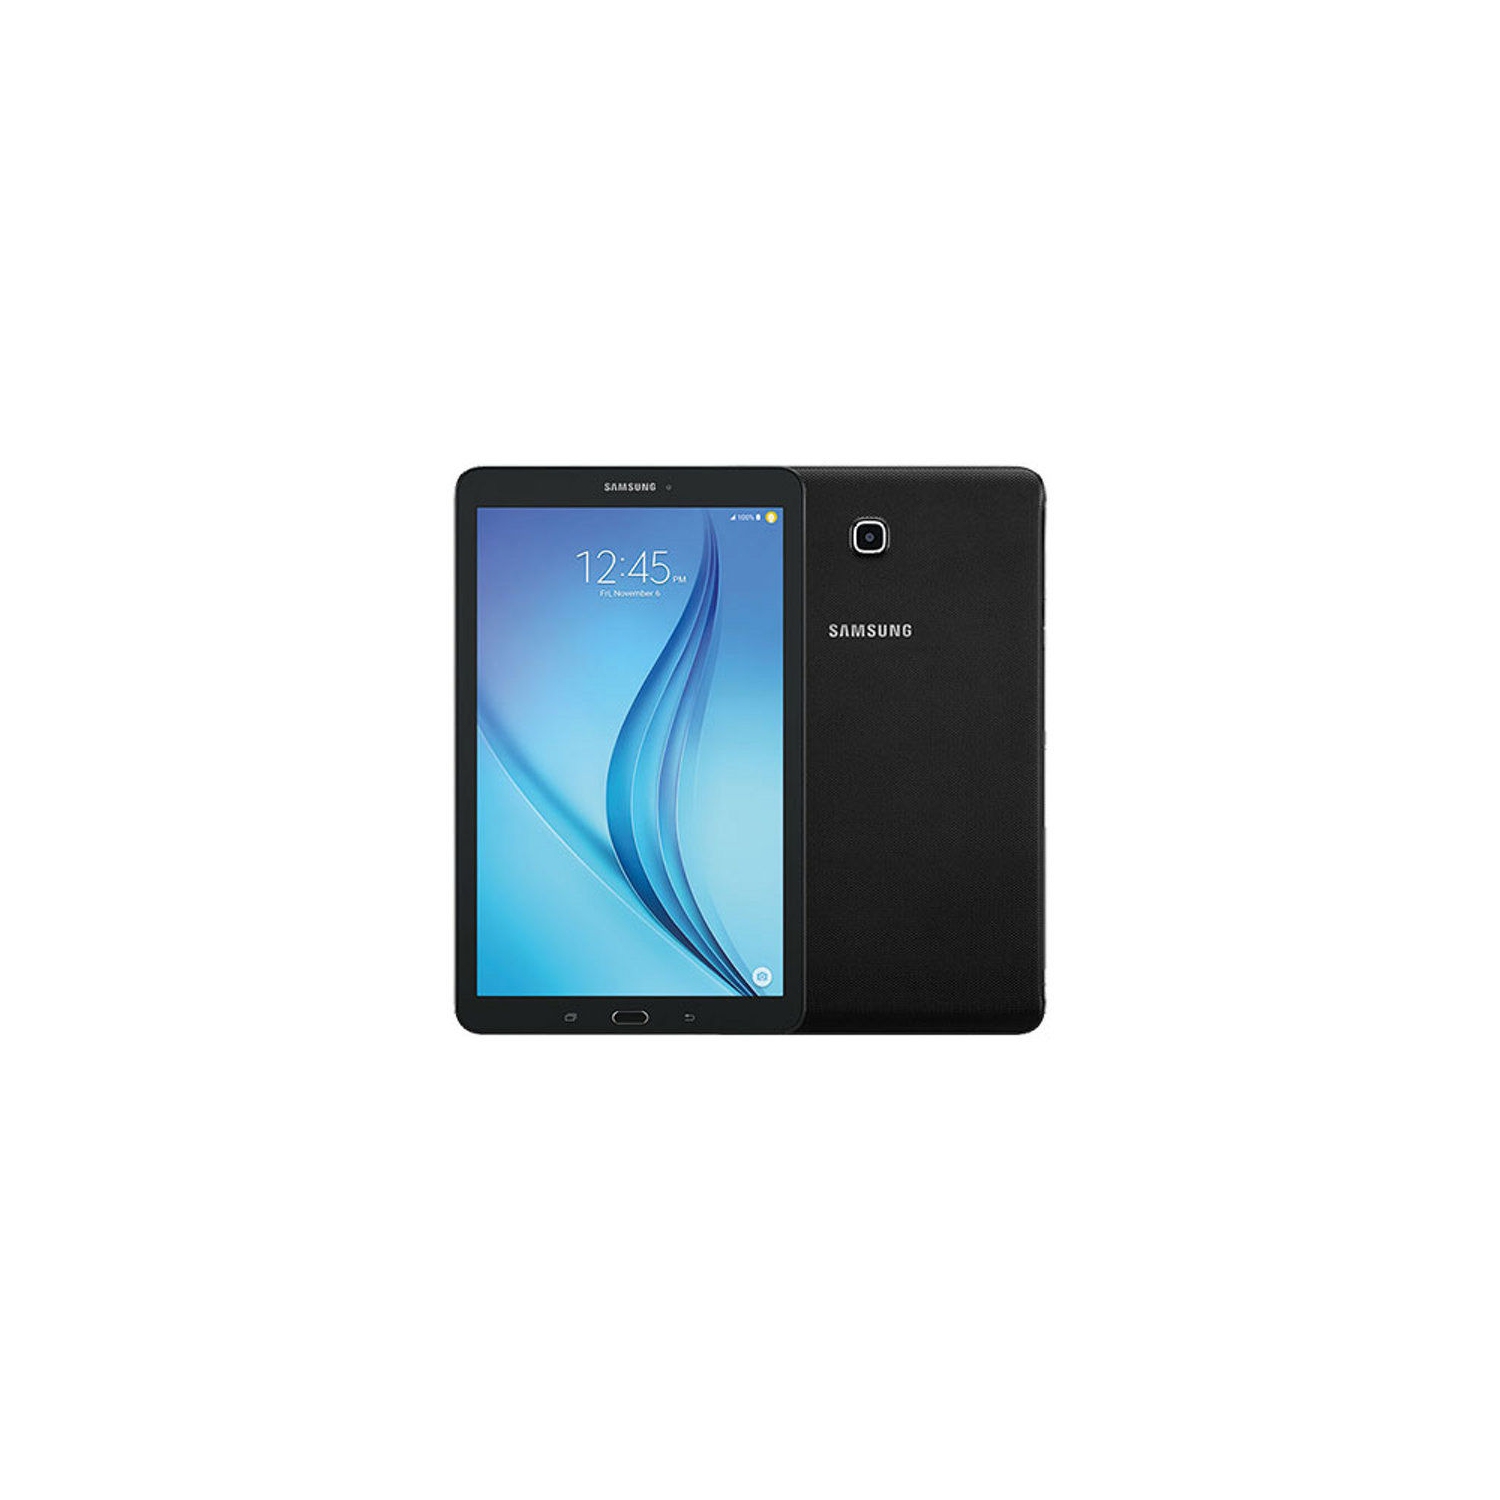 Refurbished (Excellent) - Samsung Galaxy Tab E 8" 16GB Black Canadian Model WIFI+LTE Unlocked T377W - Certified Refurbished